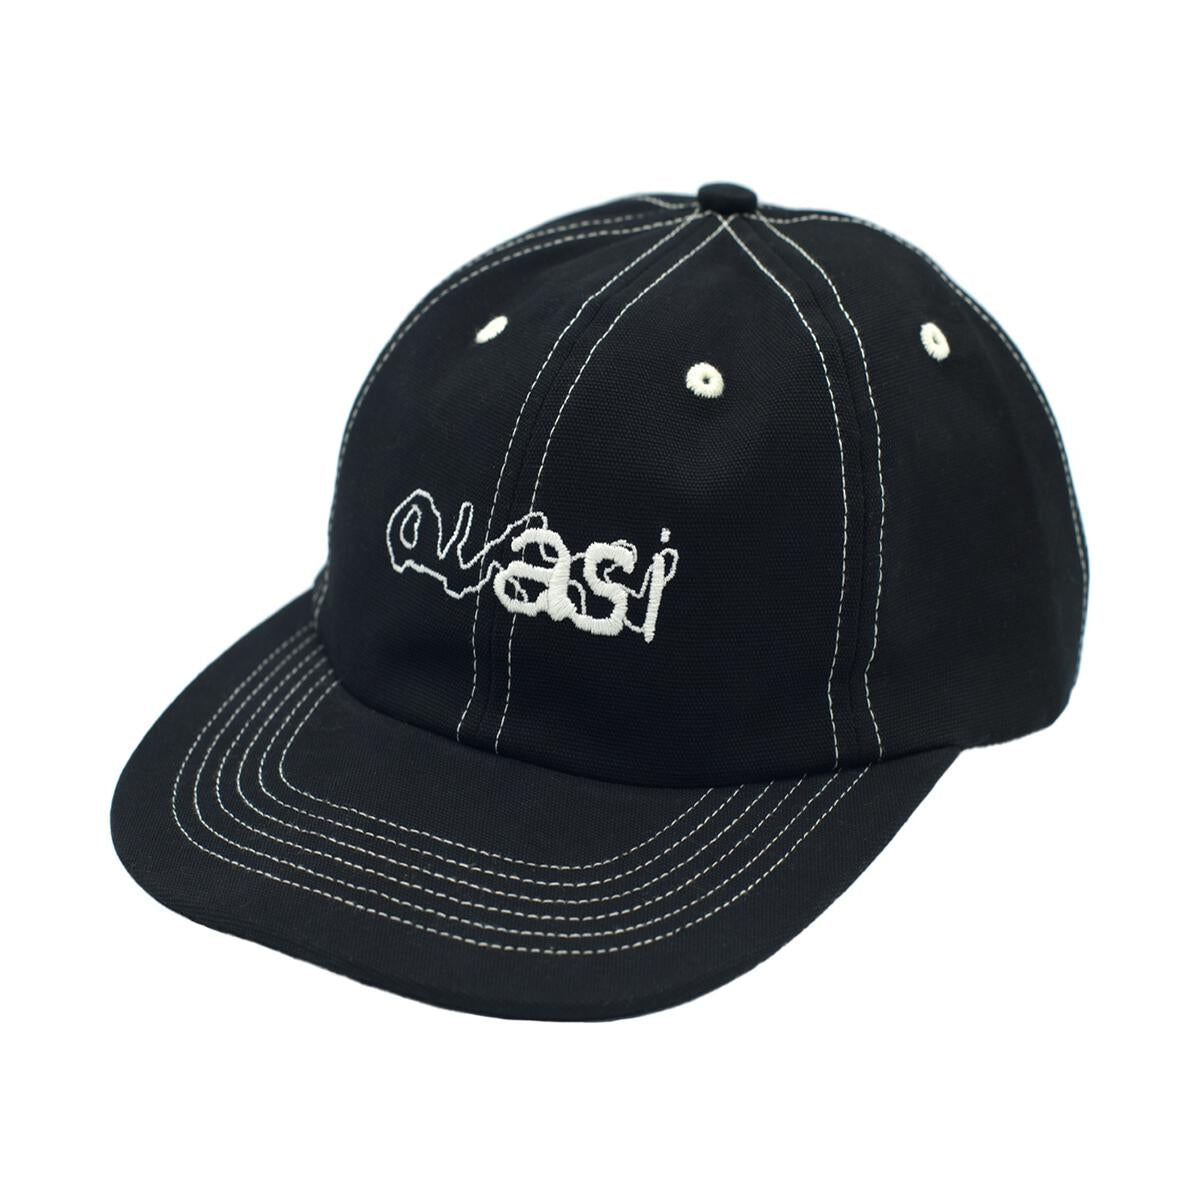 QUASI SKATEBOARDS LOWERCASE CAP BLACK CONTRAST STITCH